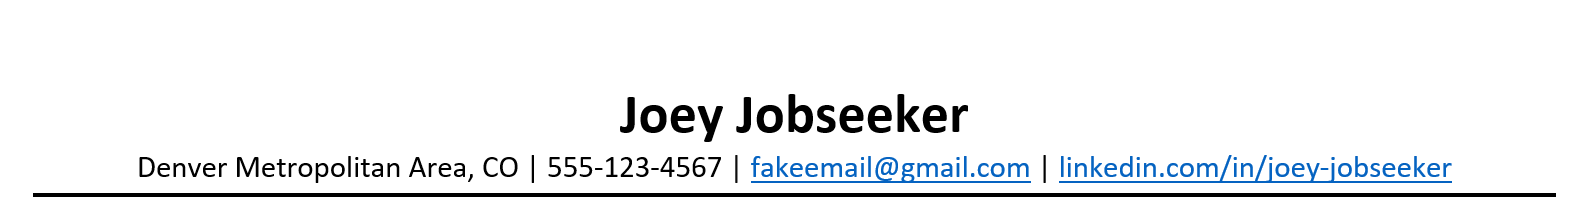 address on resume example